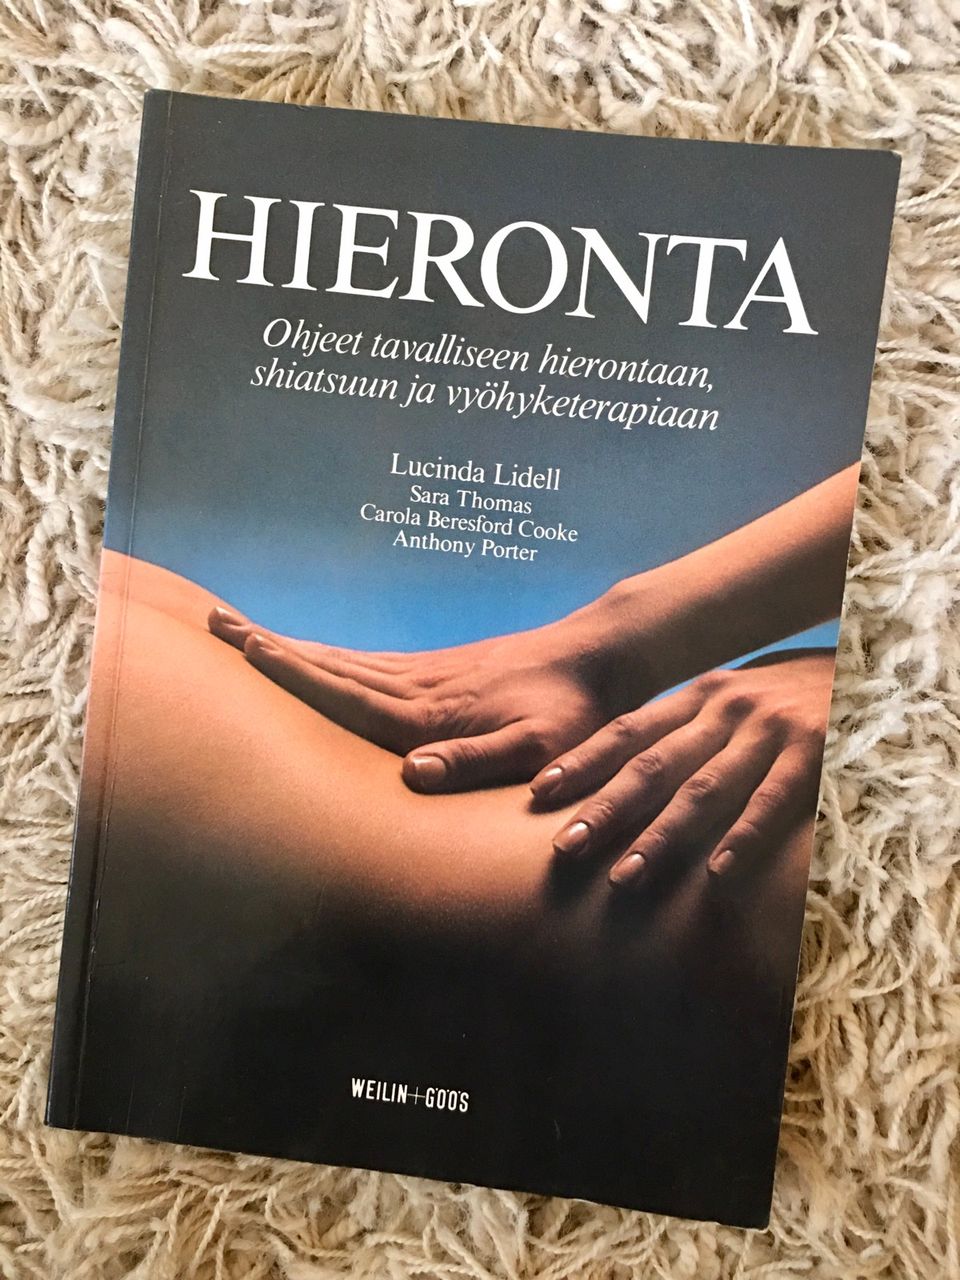 Uusi Hieronta - kirja, Lucinda Lidell ym., hieronta, shiatsu ja vyöhyketerapia